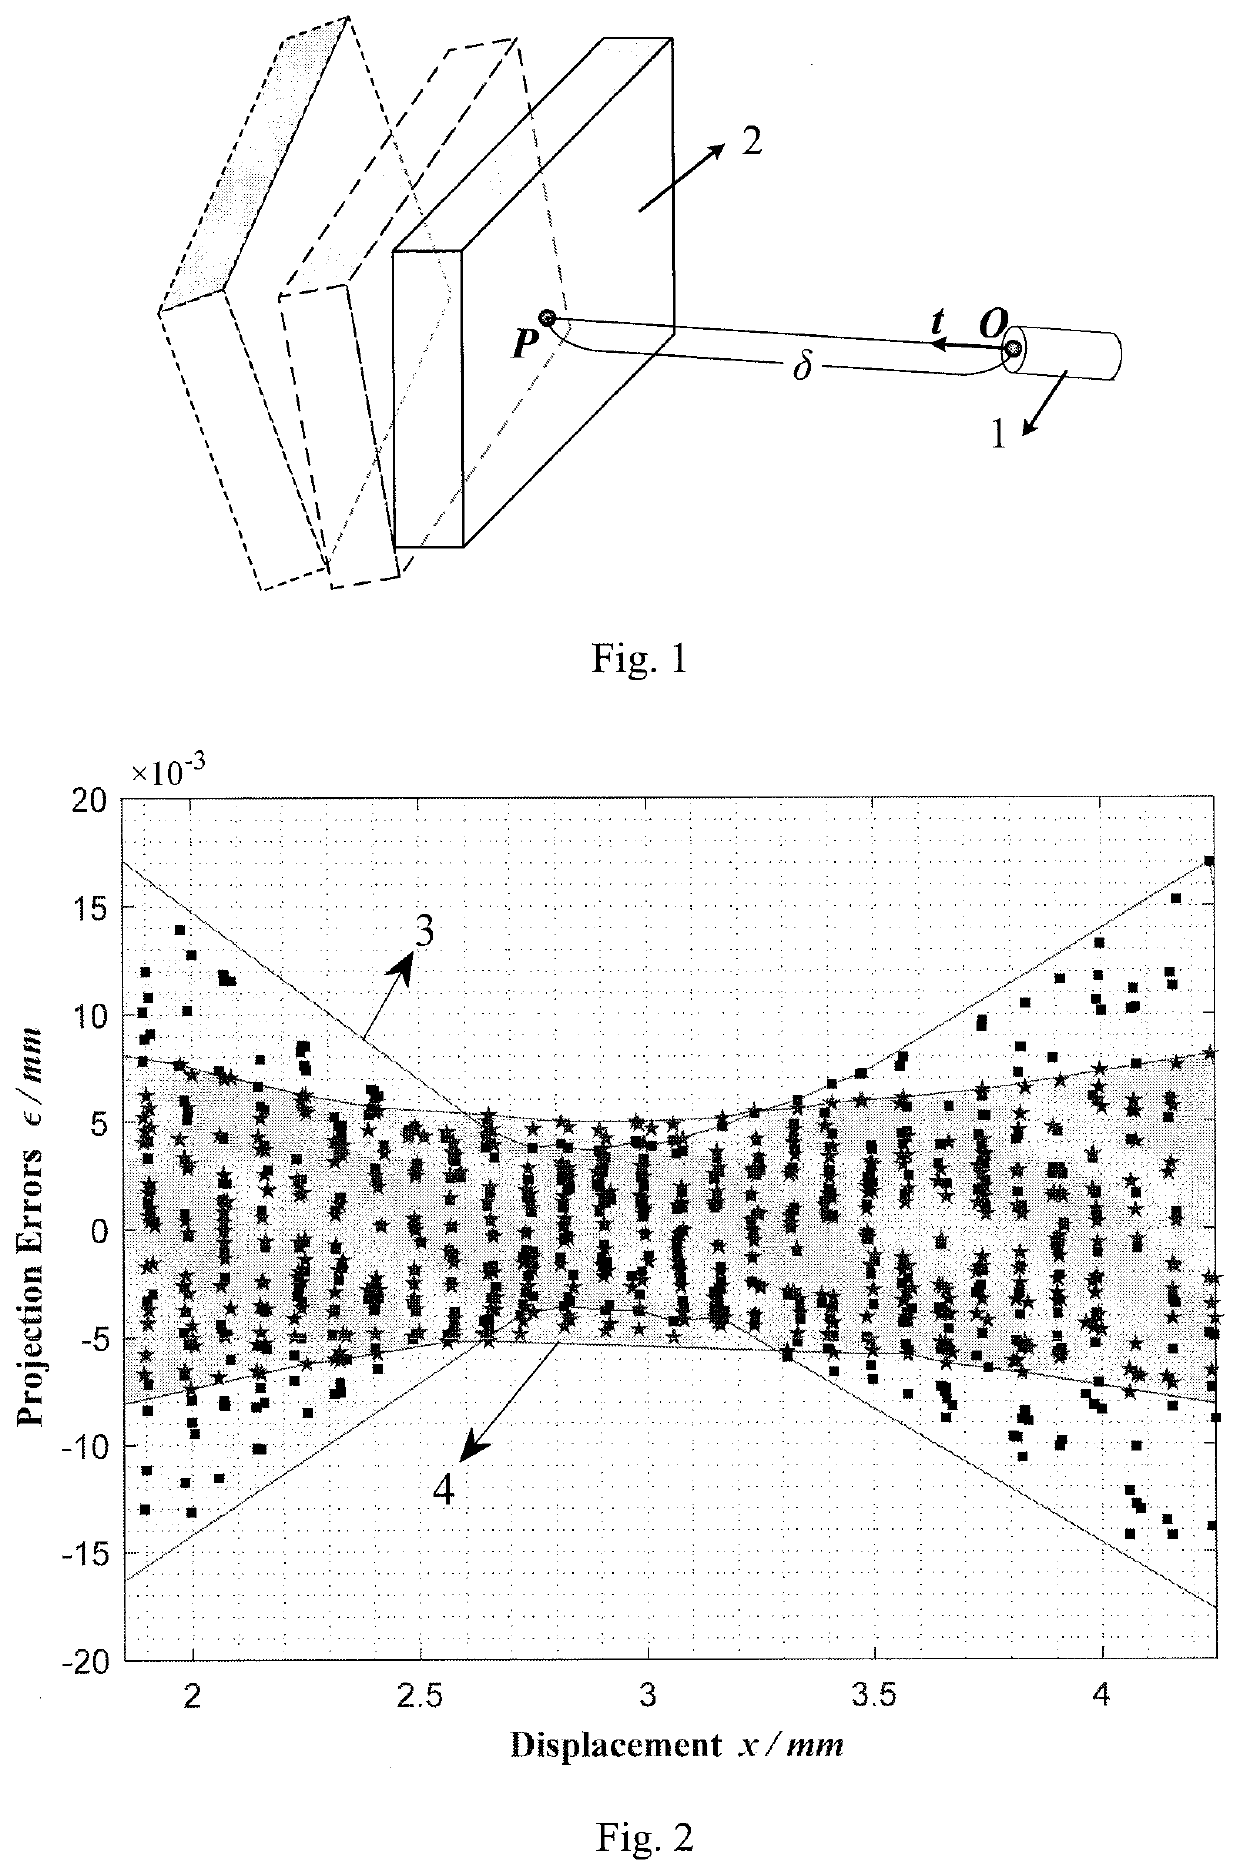 3D measurement model and spatial calibration method based on 1D displacement sensor